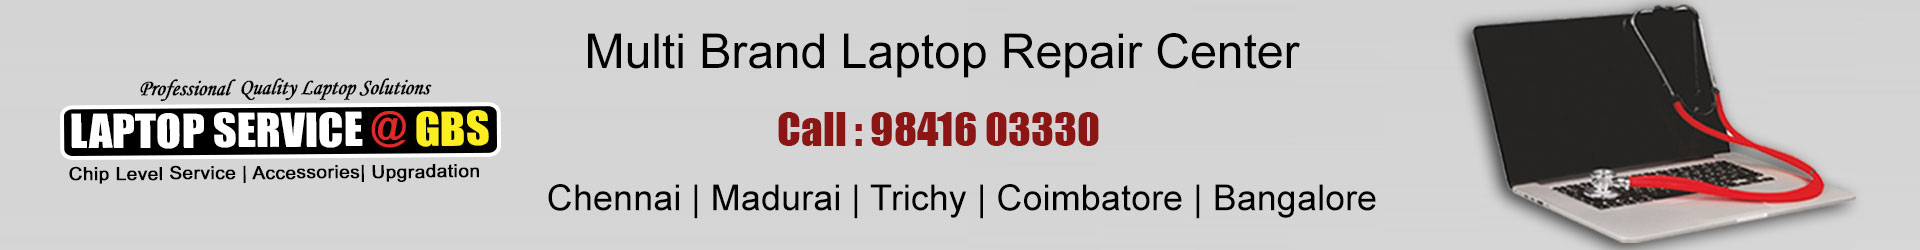 laptop service center in chrompet